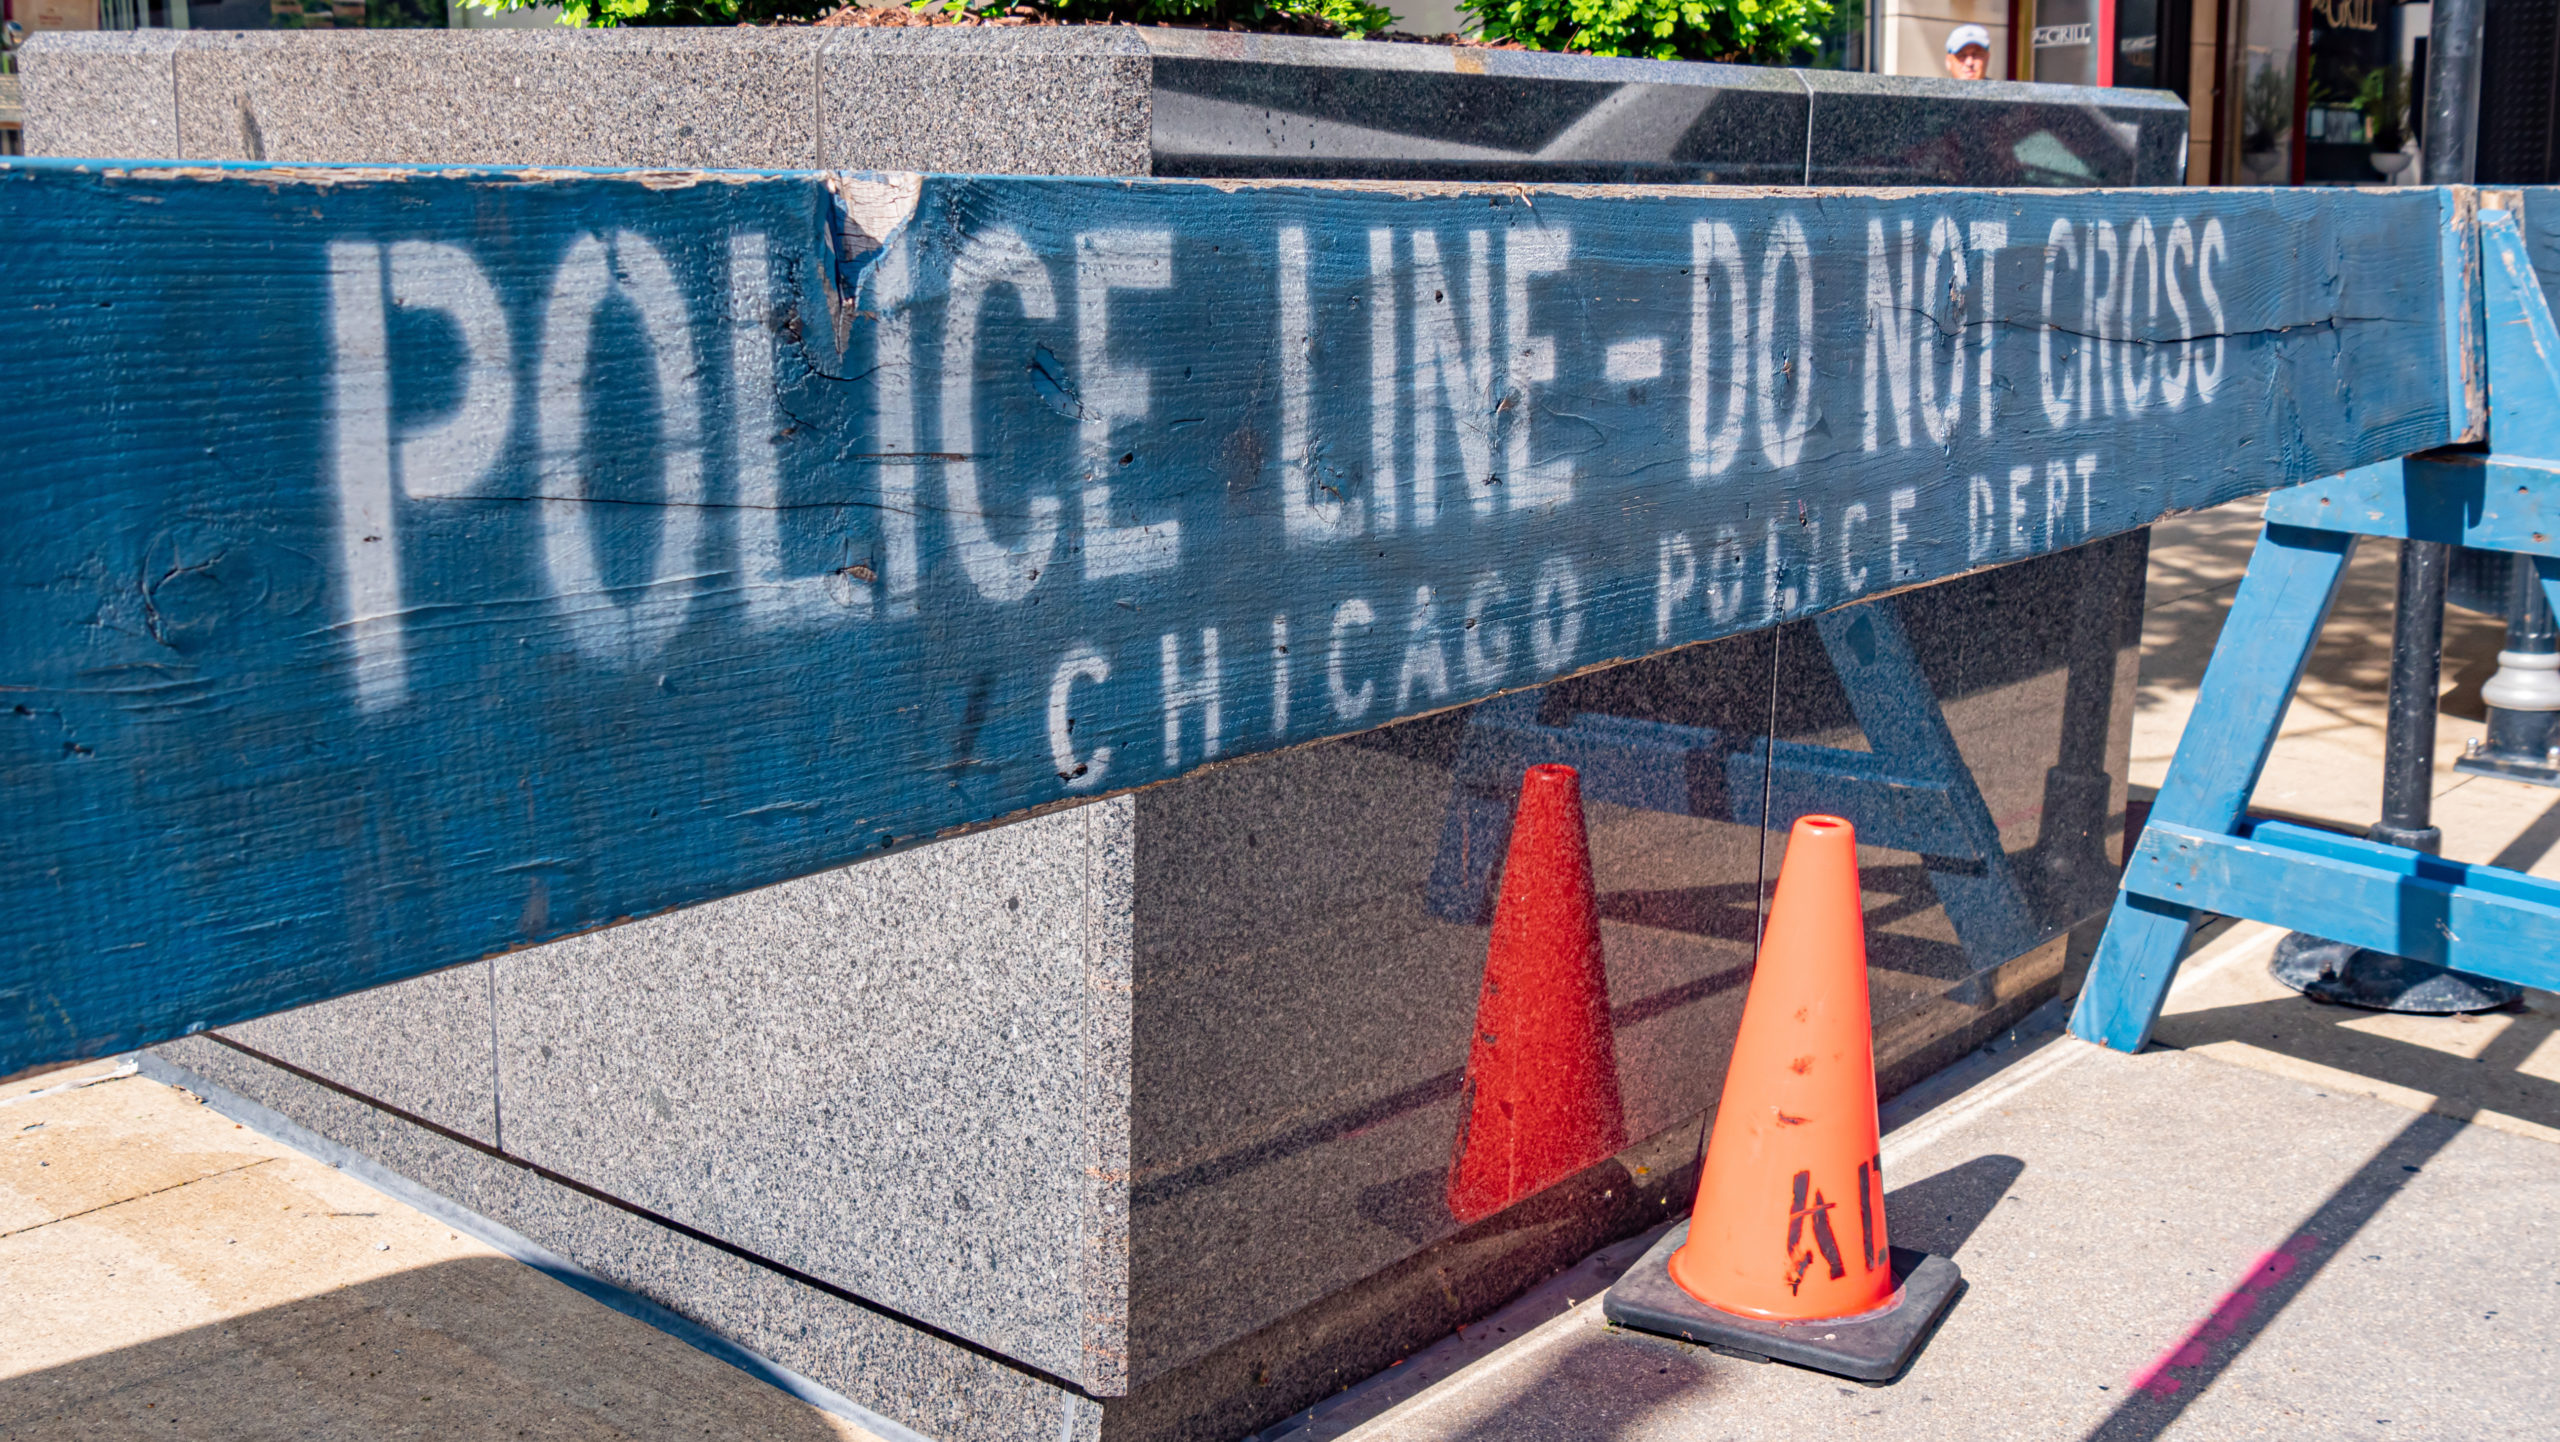 Police,Line,Do,Not,Cross,Barrier,In,Chicago,-,Chicago,